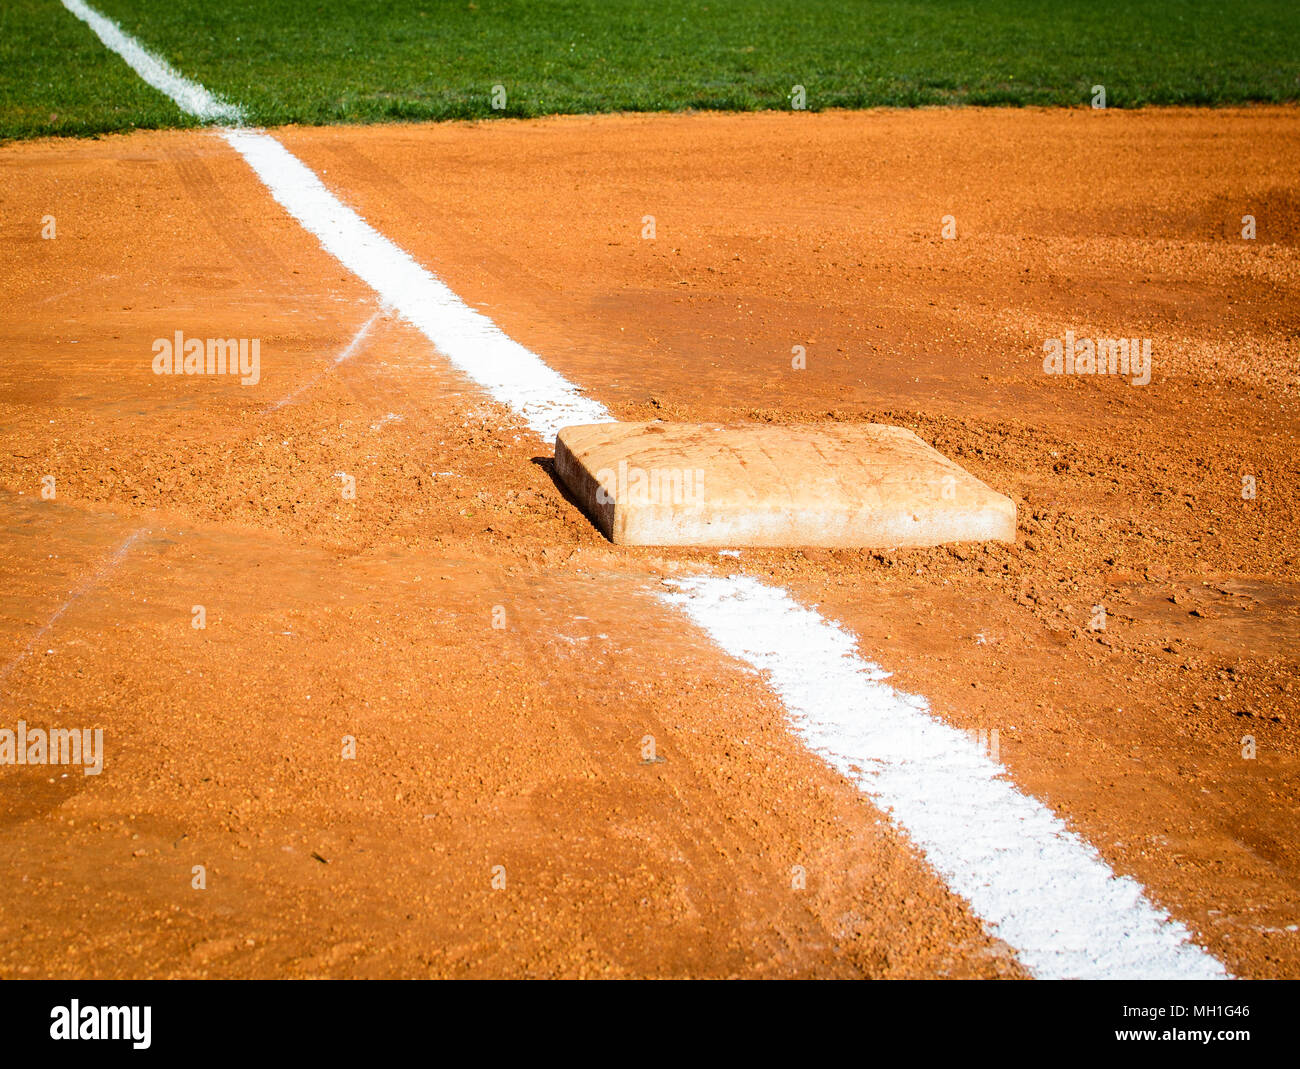 Third base on a youth baseball field Stock Photo